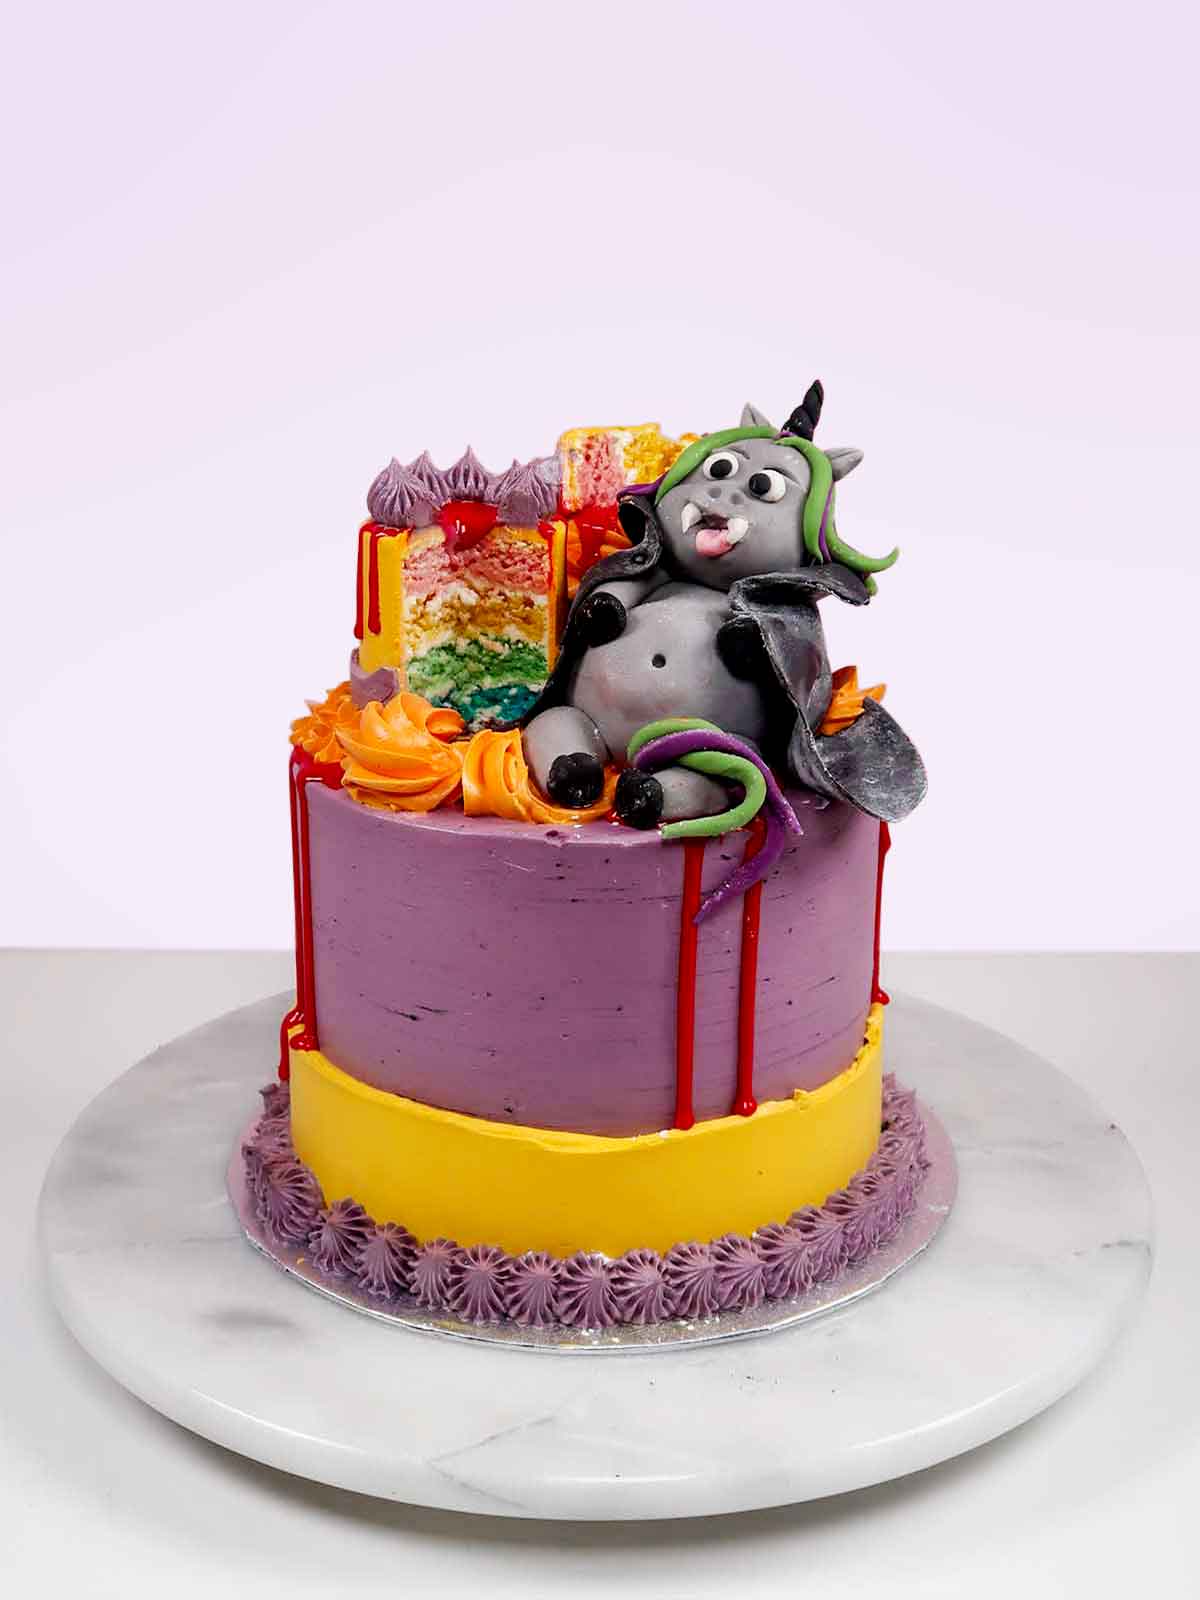 25+ Amazing Photo of Best Birthday Cake Ever - birijus.com | Cool birthday  cakes, Vanilla birthday cake, Homemade birthday cakes